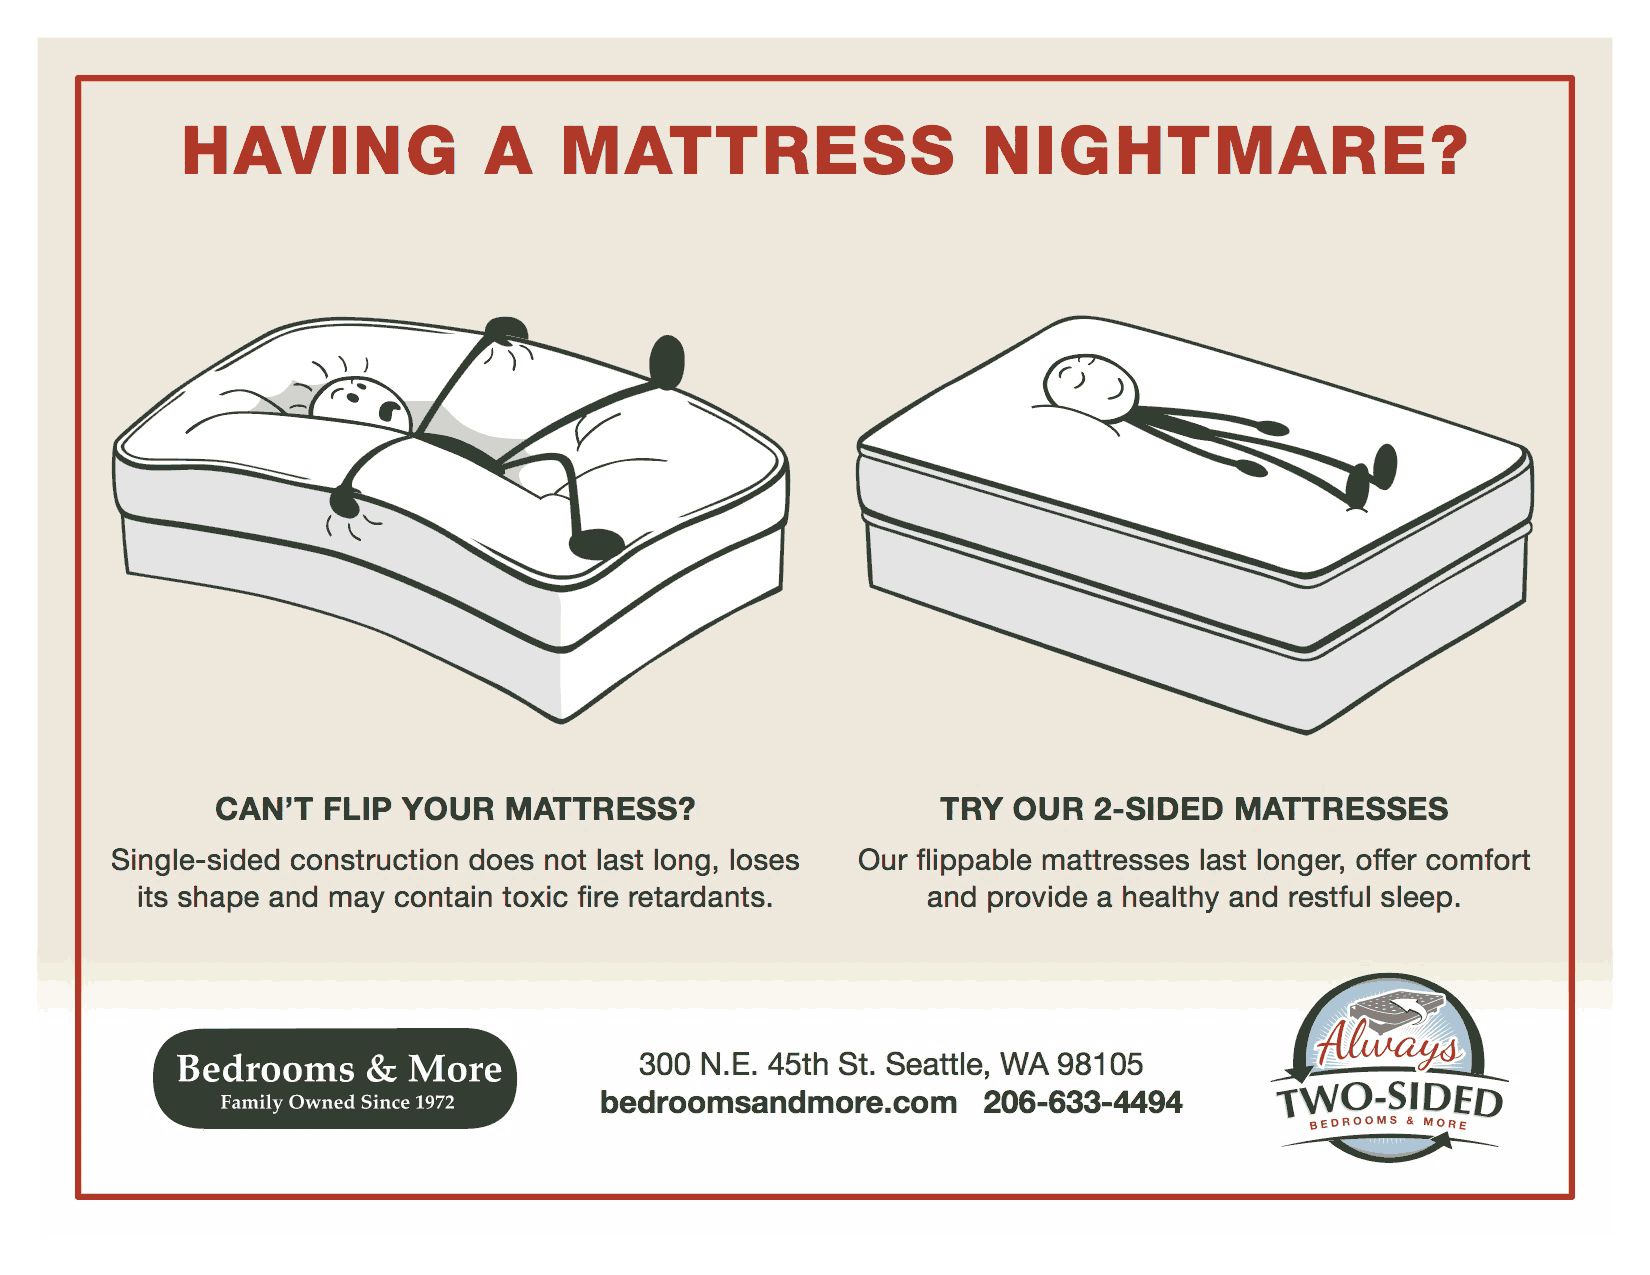 Having a mattress nightmare? One